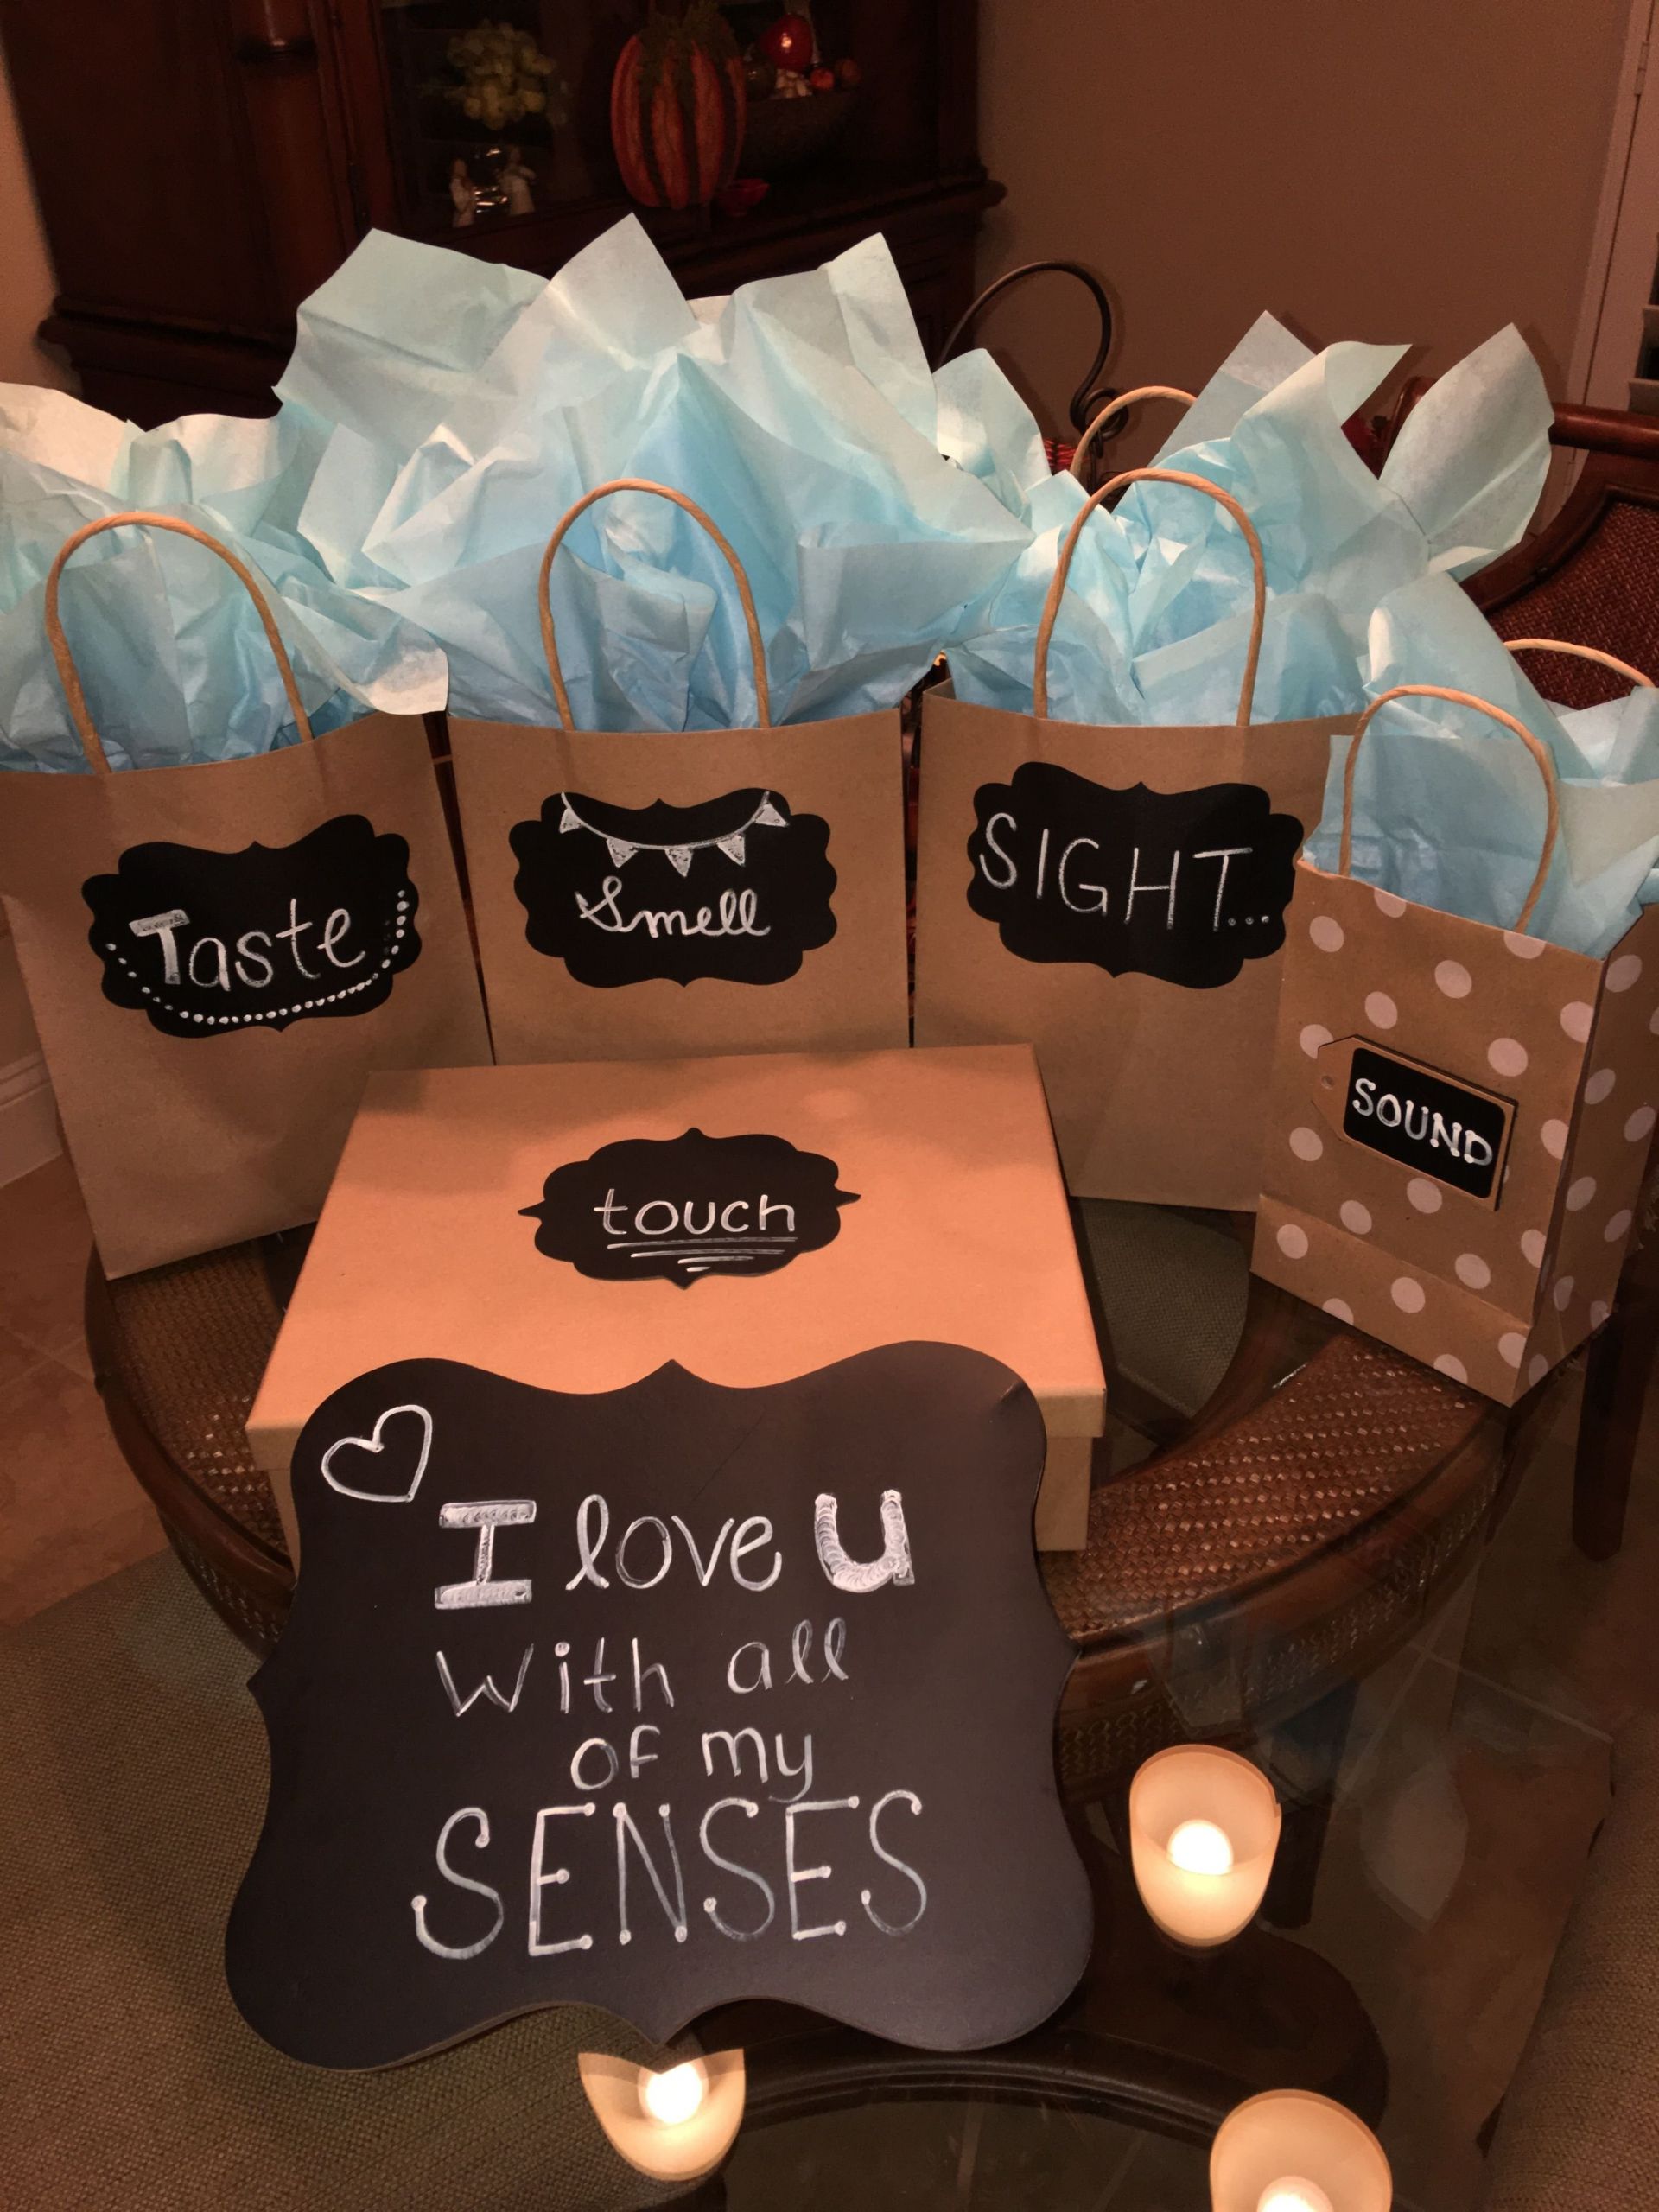 Creative Birthday Gift Ideas For Boyfriend
 10 Lovable Romantic Birthday Gift Ideas Boyfriend 2020